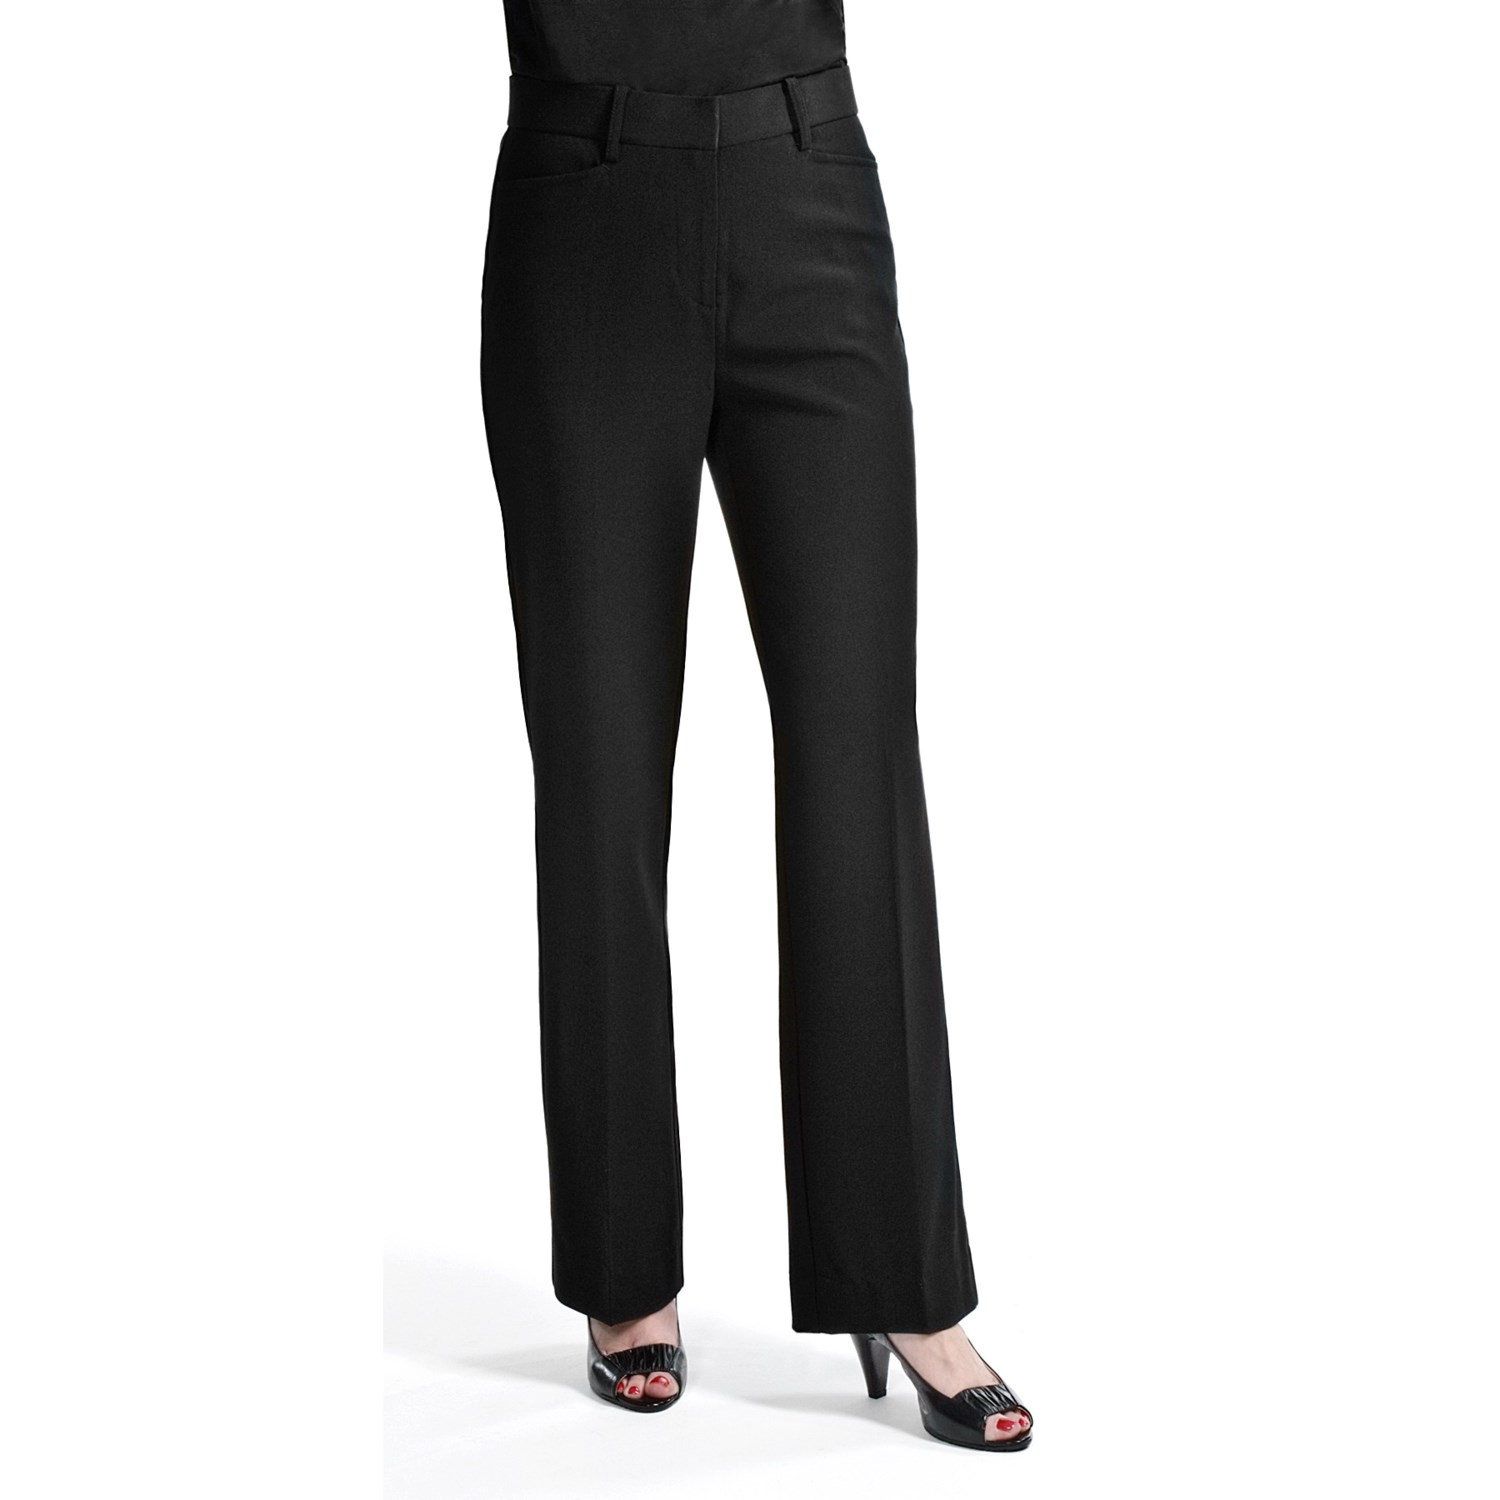 Casual Studio Dress Pants (For Women) 3329V - Save 70%